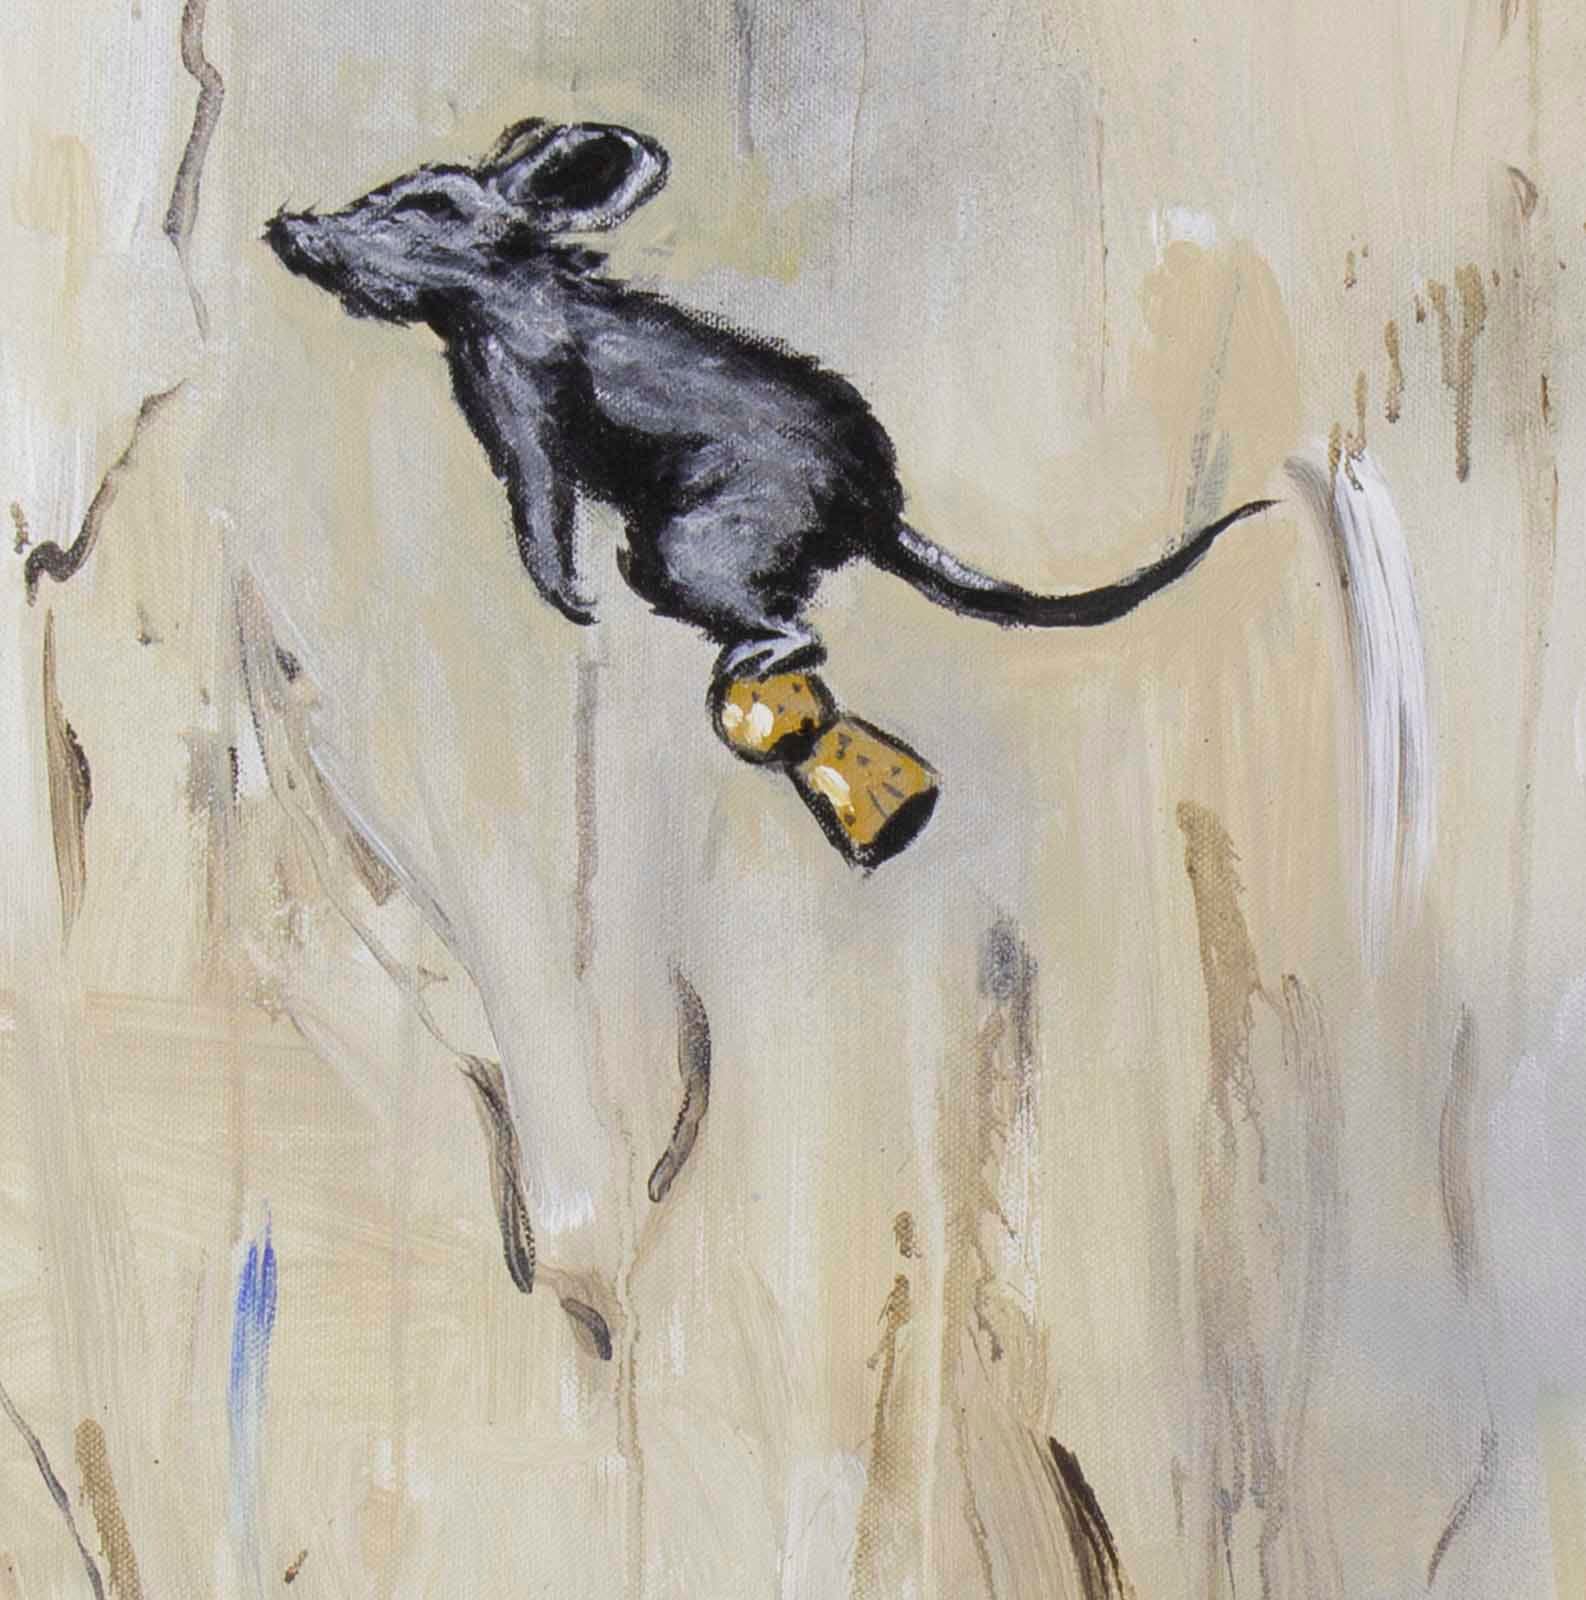 Banksy’s Rat